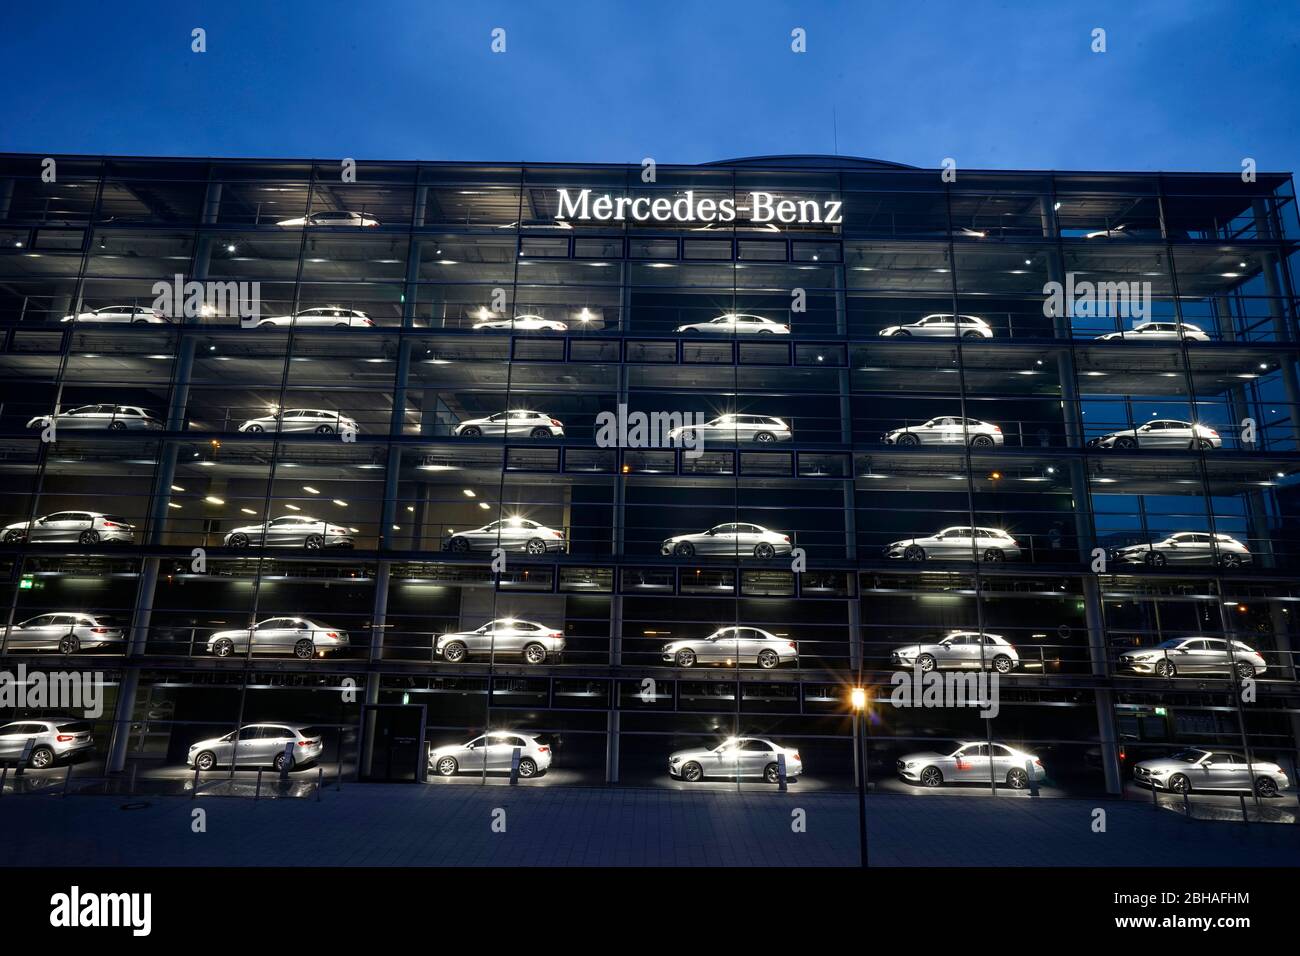 Alemania, Baviera, Munich, Mercedes-Benz sucursal, exterior, expide coches en seis plantas Foto de stock